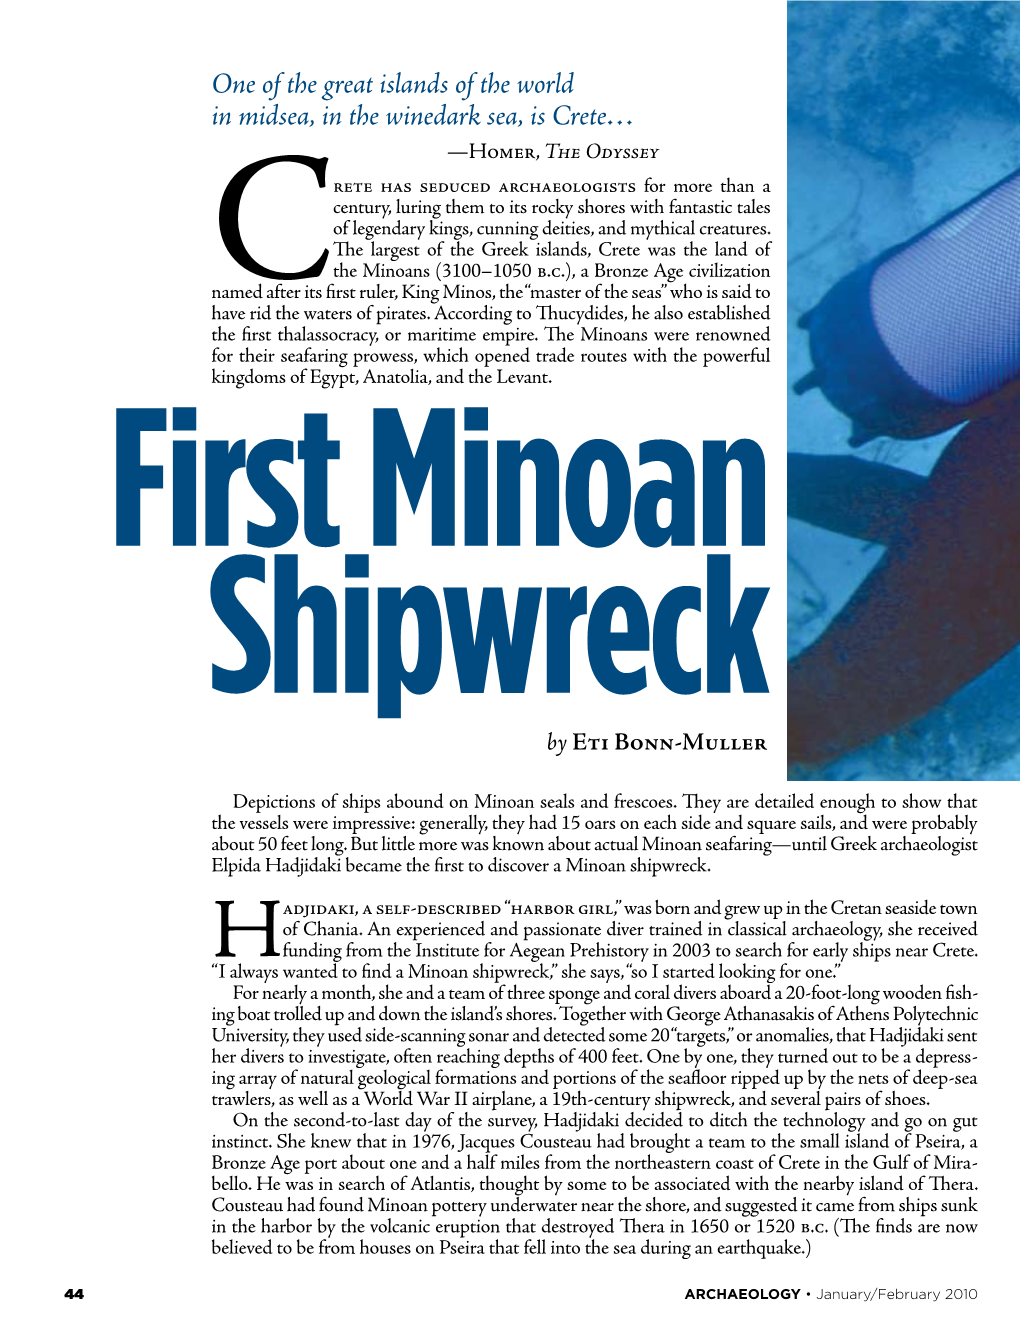 First Minoan Shipwreck by Eti Bonn-Muller